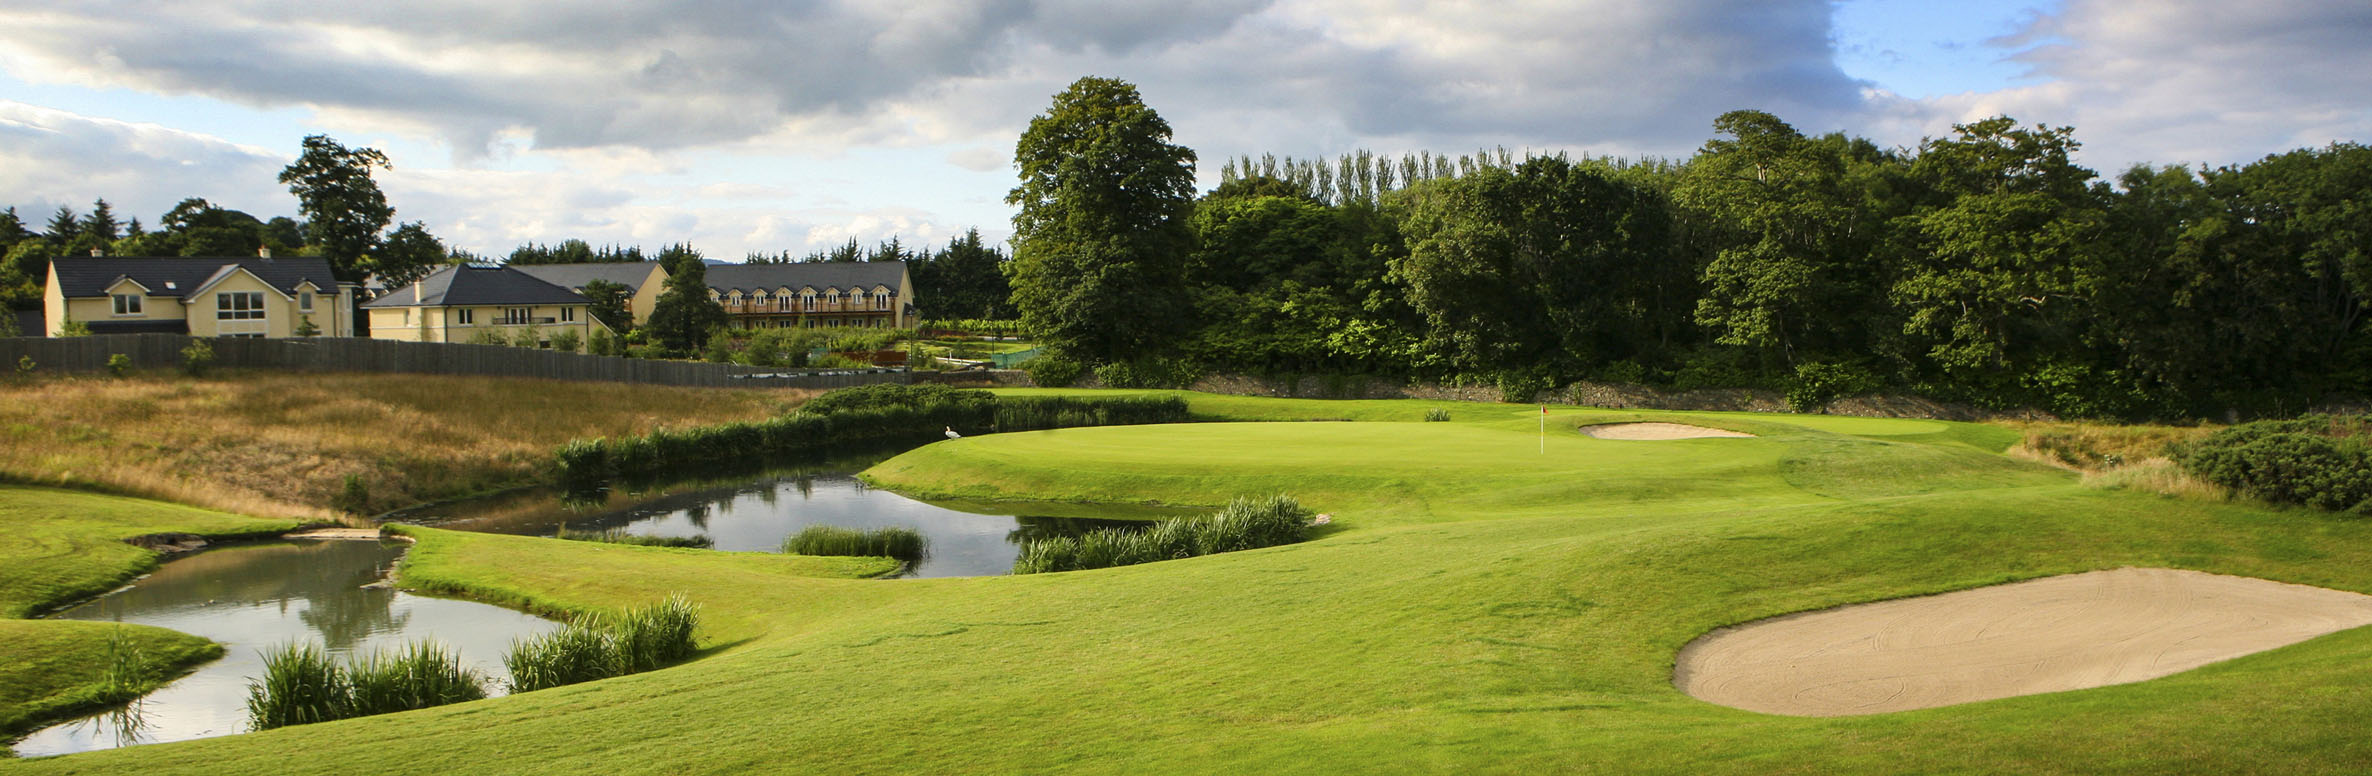 Golf Course Image - Druids Heath Golf Club No. 2